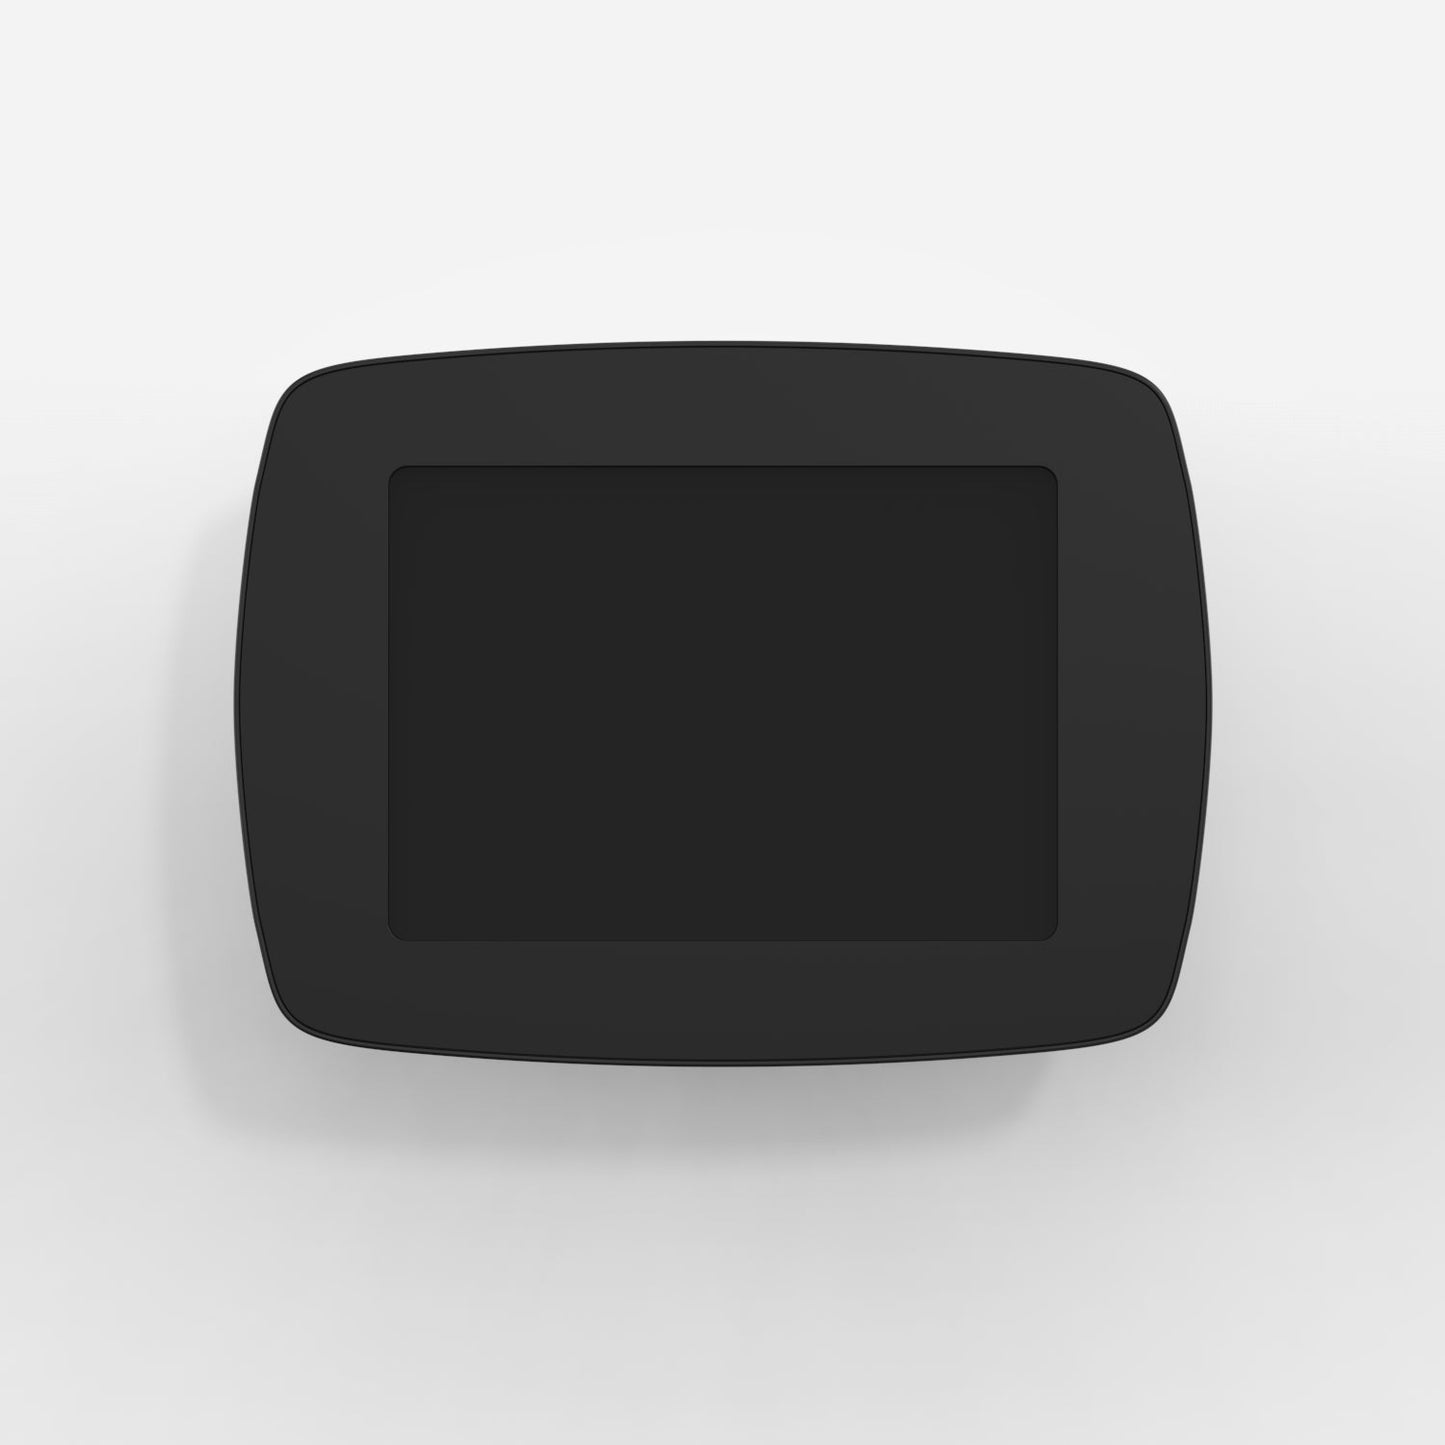 Bouncepad Vesa - A secure tablet & iPad vesa mount in black.